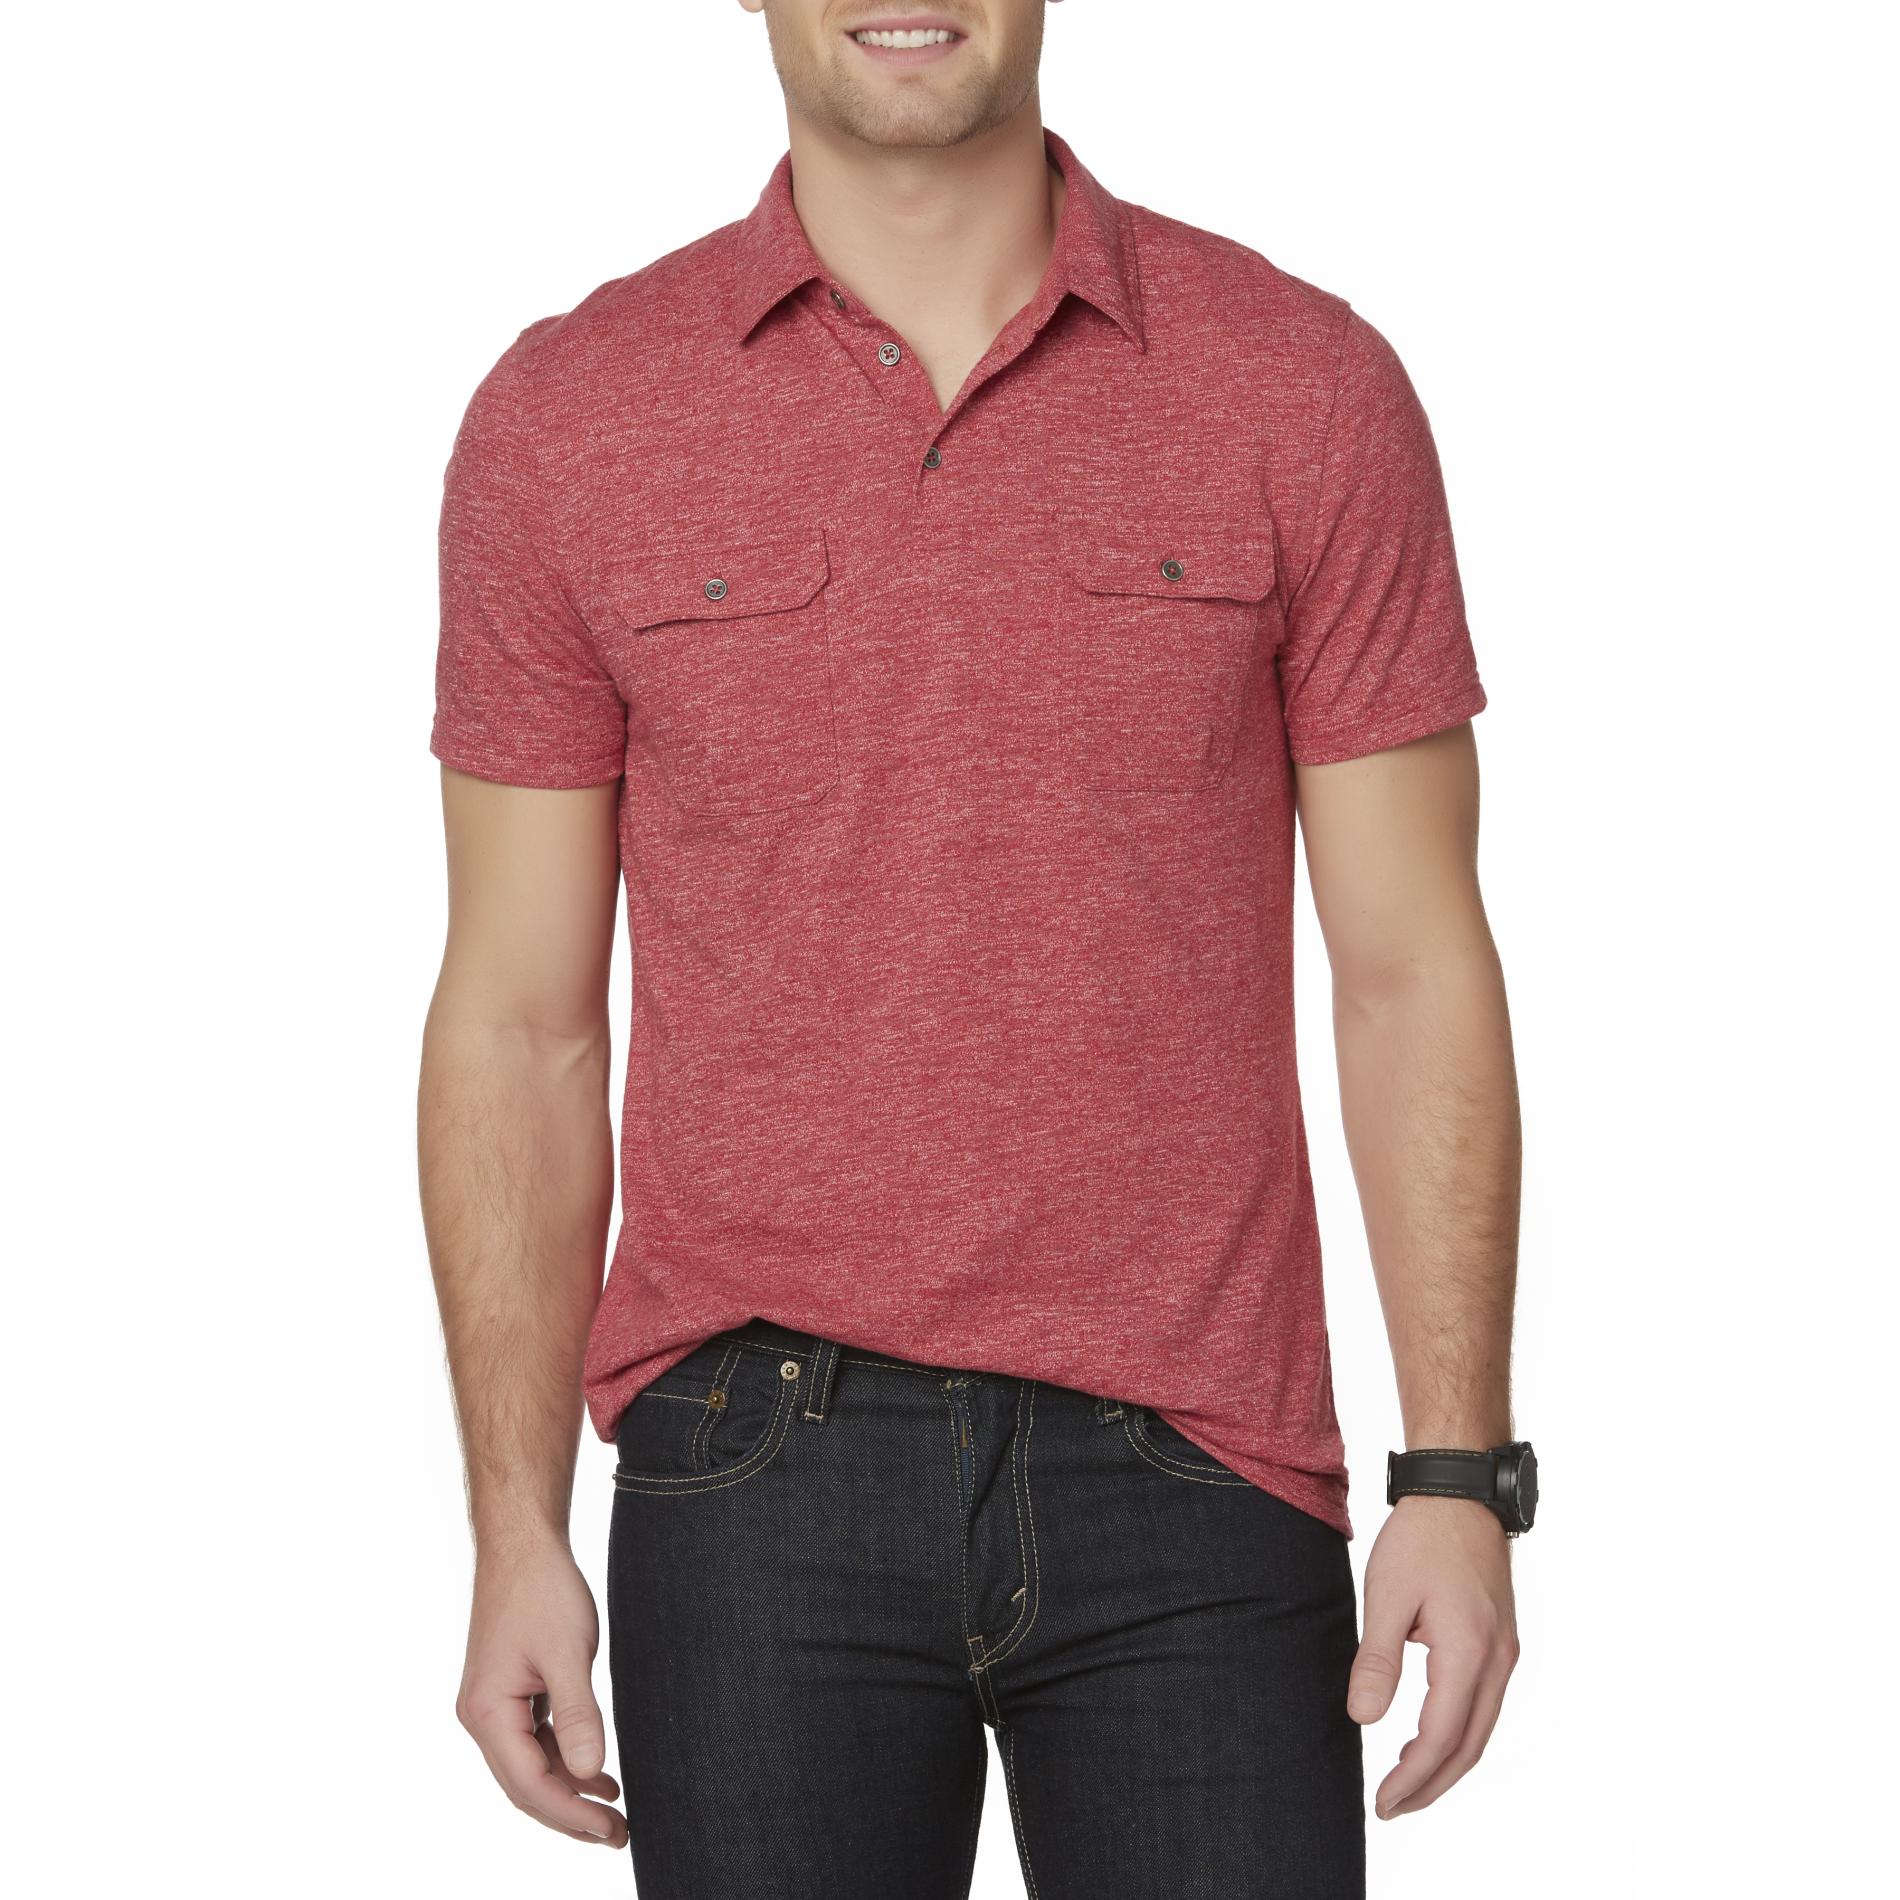 Structure Men's Short-Sleeve Shirt - Marled